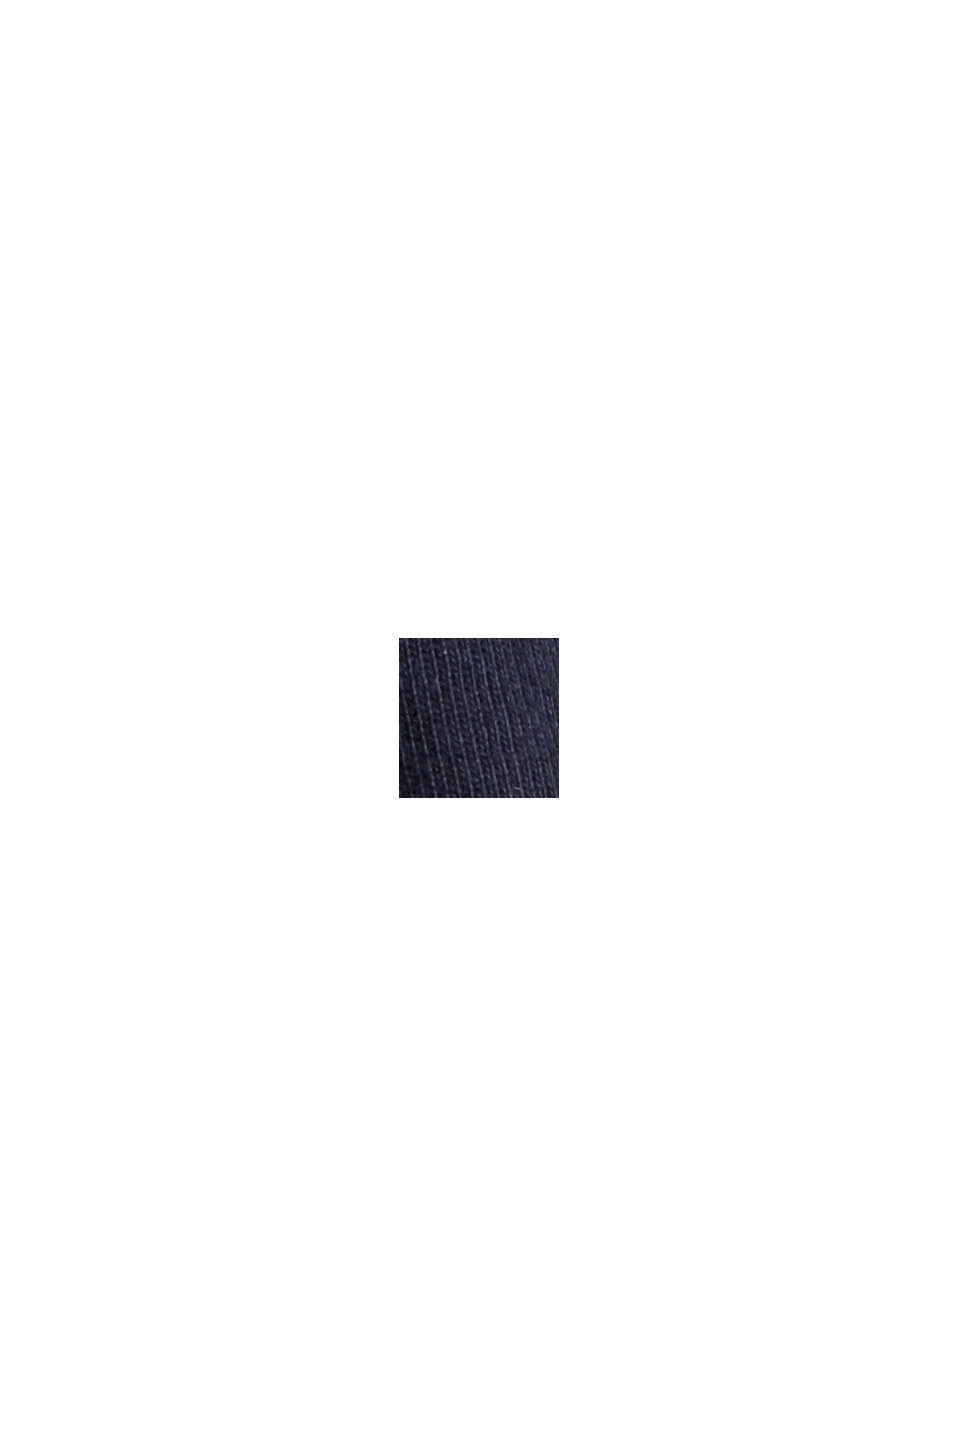 Maglia a manica lunga in jersey di cotone biologico, NAVY, swatch